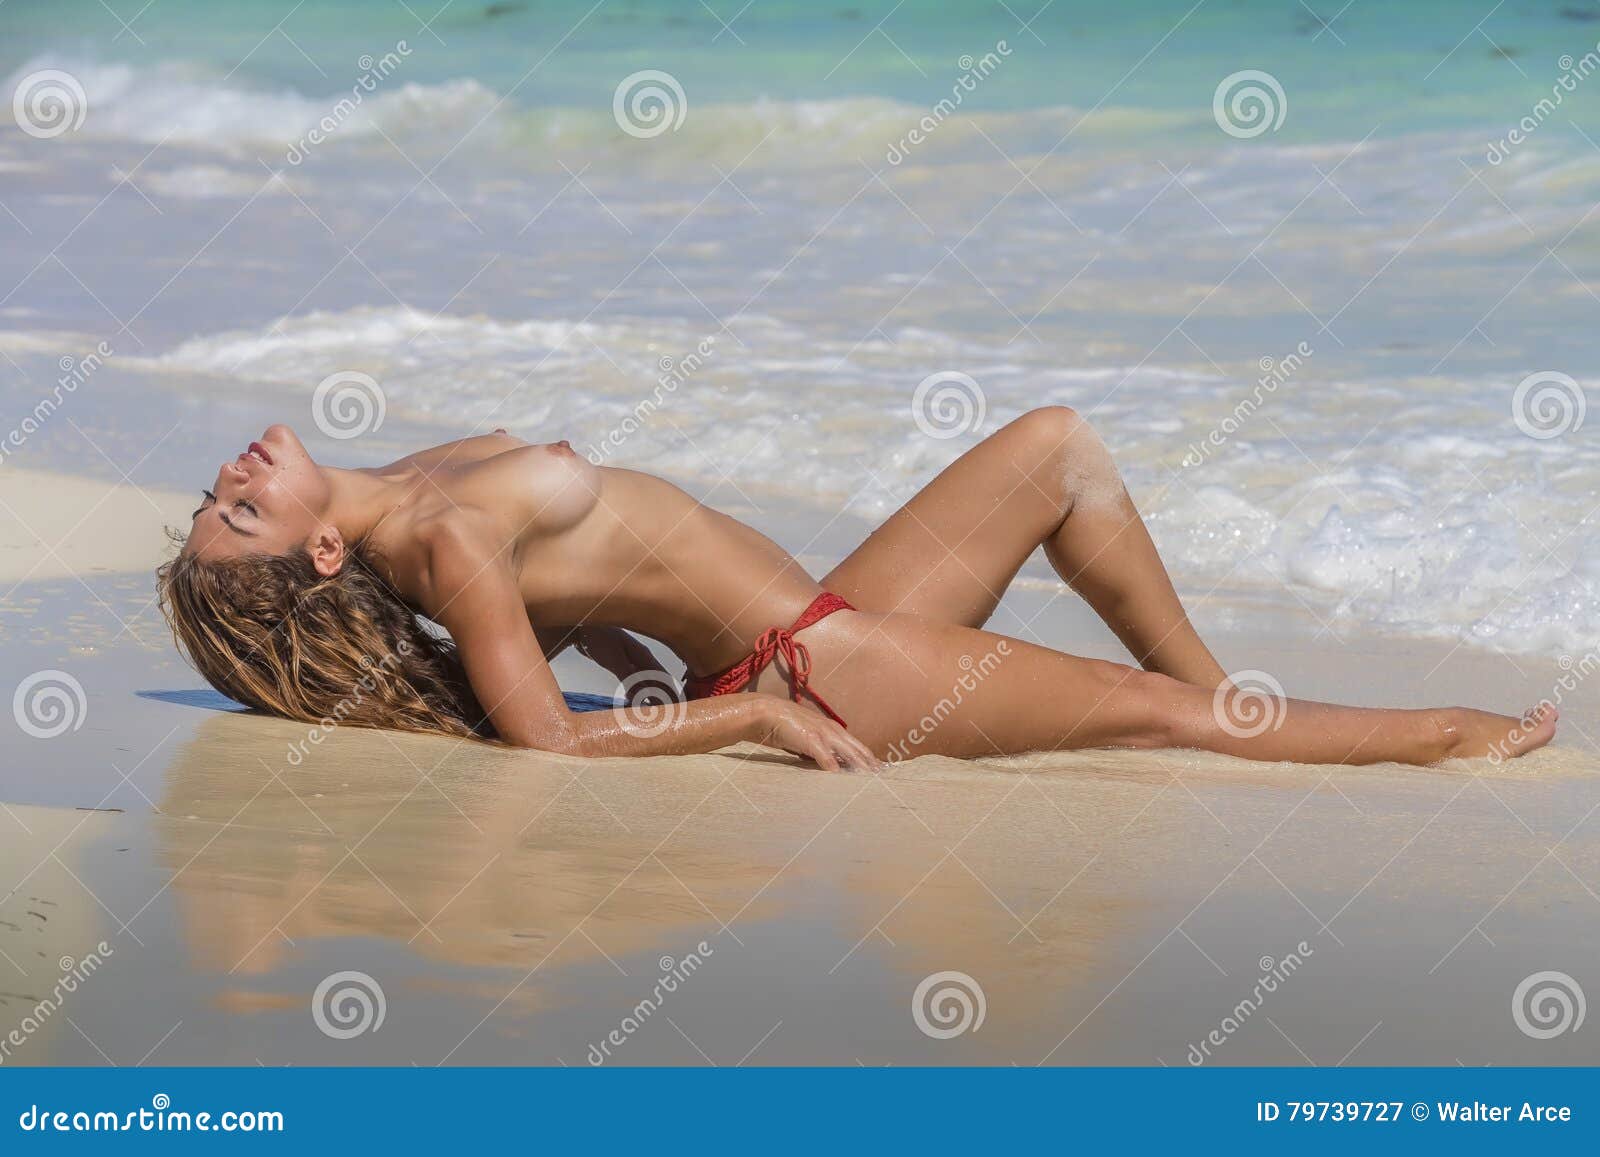 Amy Schumer Escort Shoot Desnudo Hispanische Modelle